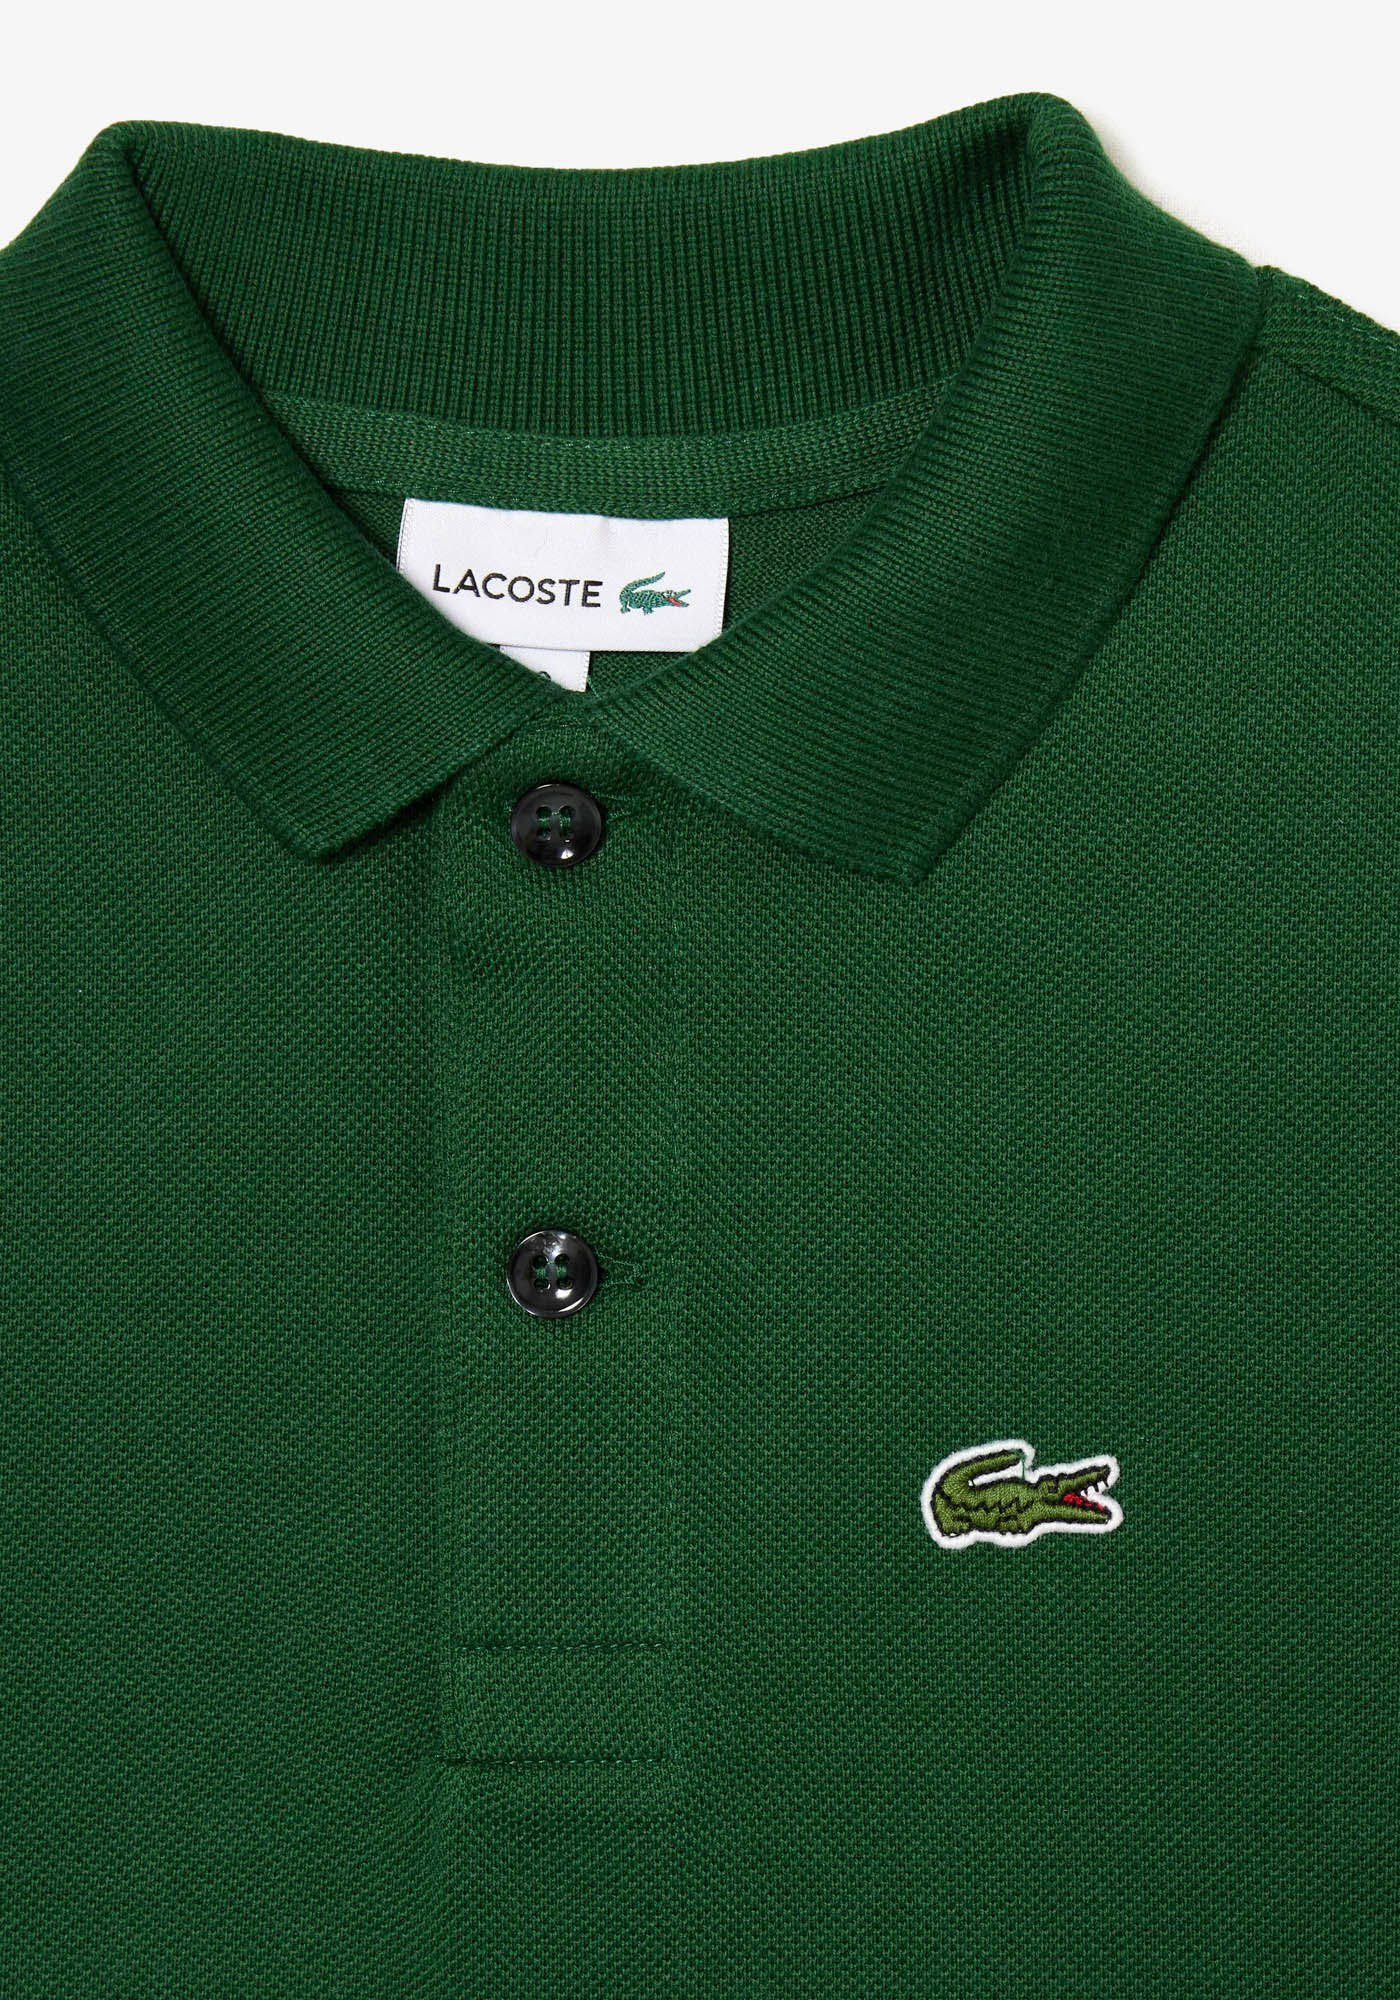 Kroko Kinder Kids mit Lacoste aufgesticktem MiniMe,Junior, Polo Kids grün Junior Poloshirt